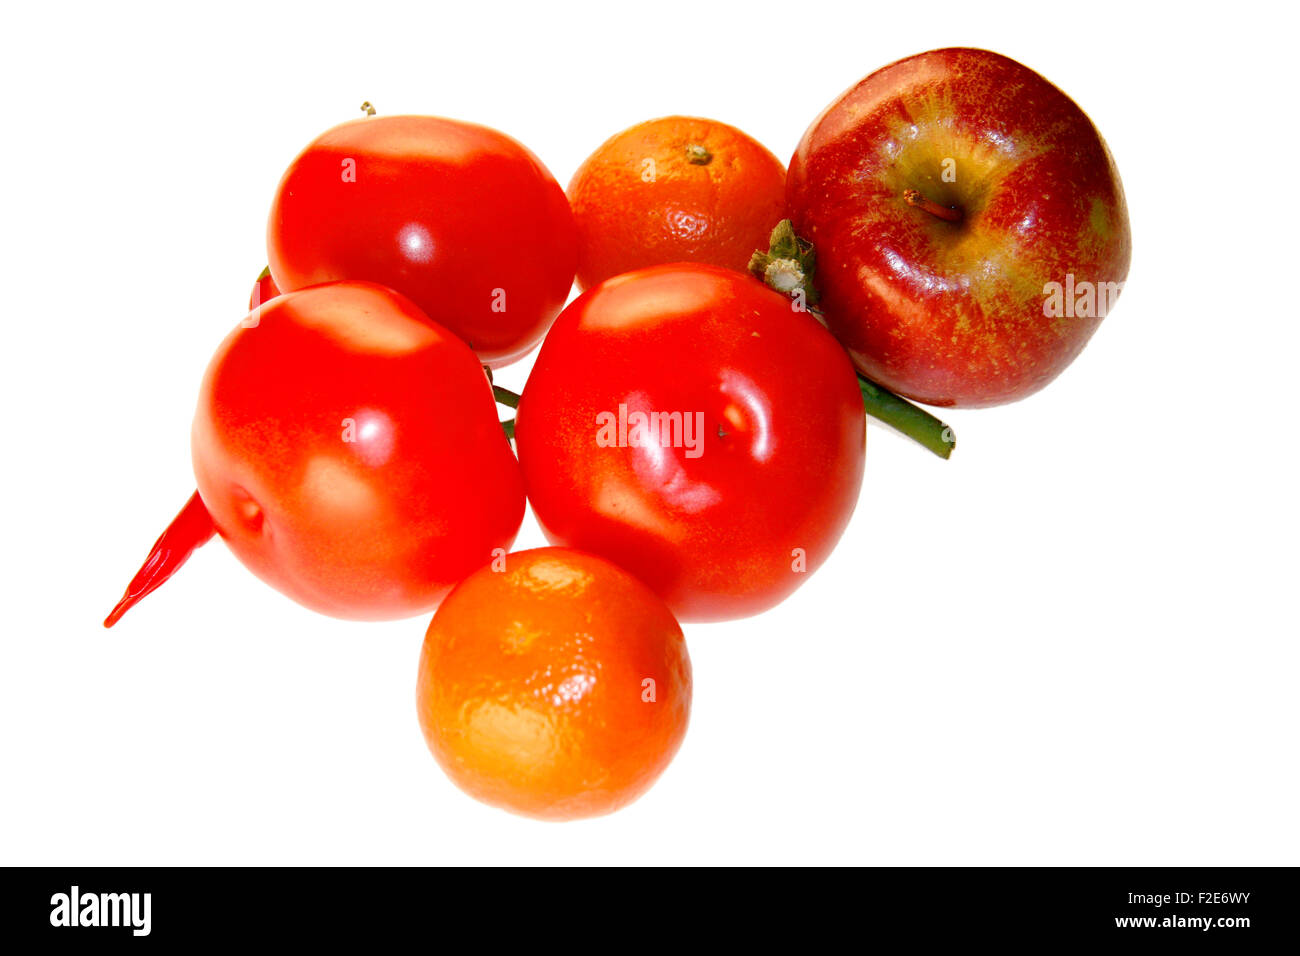 Obst / Gemuese: Rote Chillyschote, Tomaten, Mandarinen, Apfel - Symbolbild Nahrungsmittel. Stockfoto